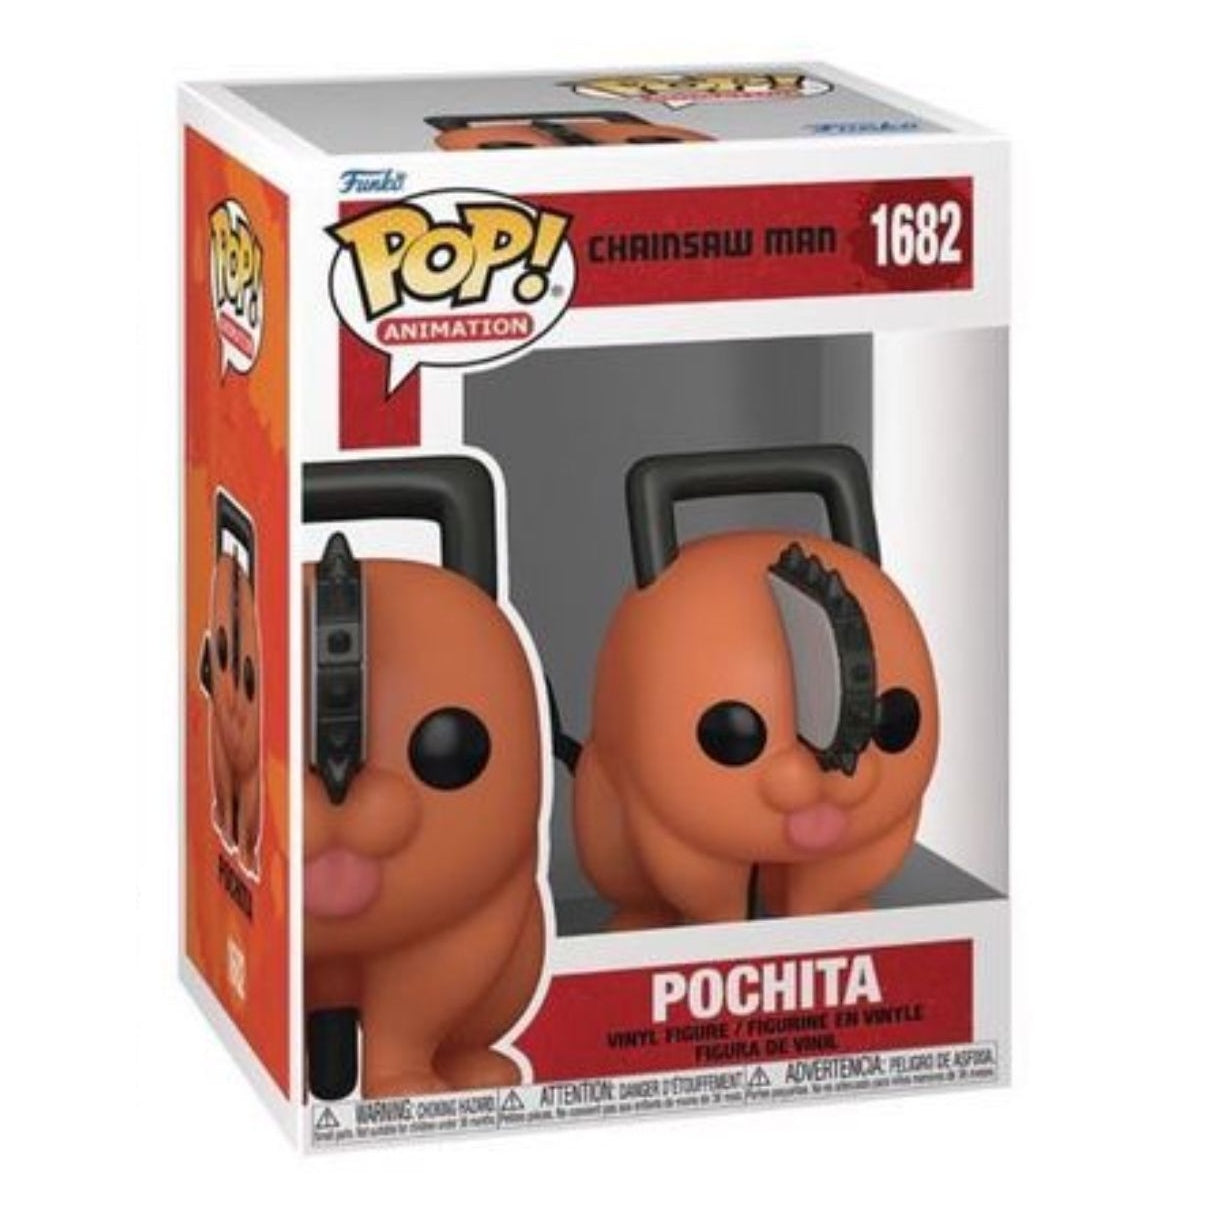 ""PRE-ORDER"" Funko POP! Chainsaw Man: Pochita